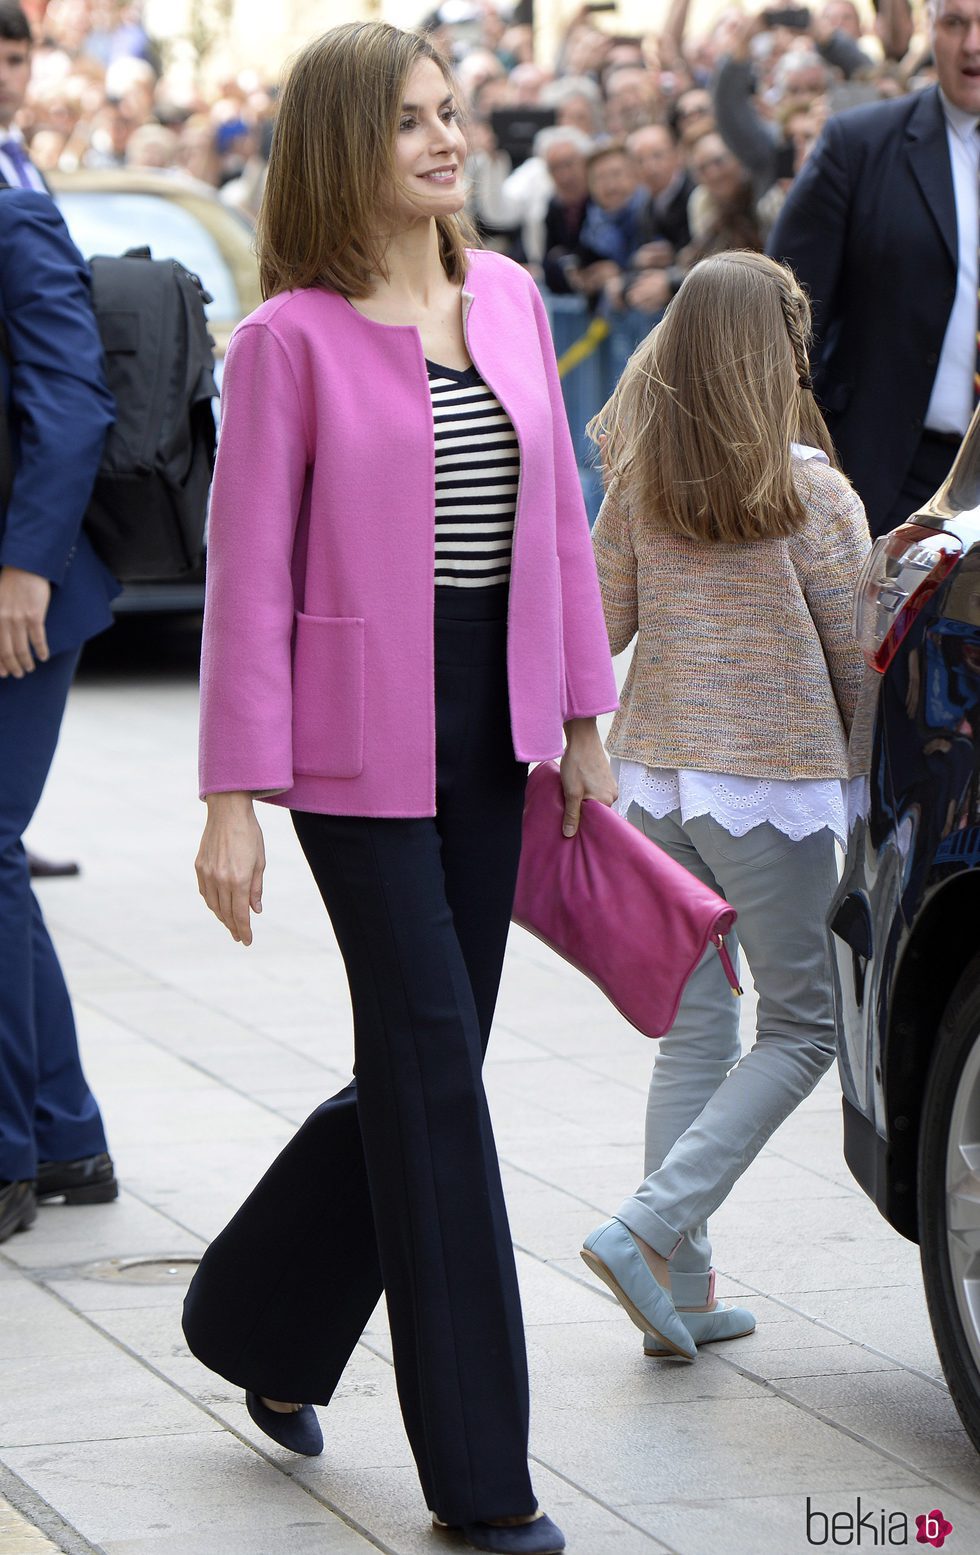 La Reina Letizia con una chaqueta rosa fucsia en la Misa de Pascua en Mallorca 2016